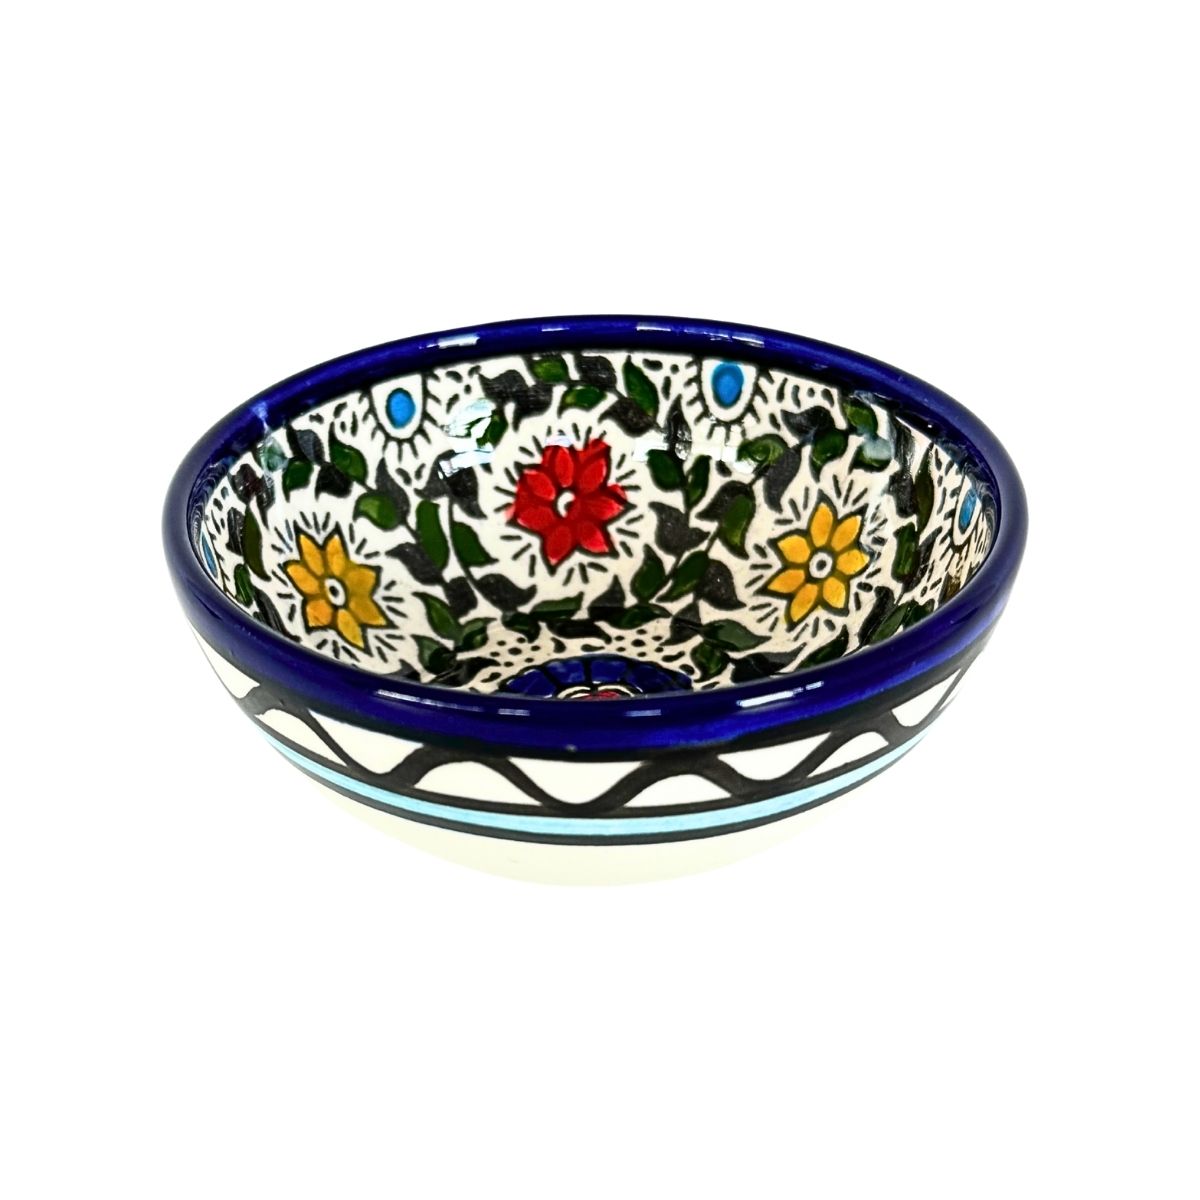 Ceramic "Dipping" Bowl (3.5”) - Multicolored Vine